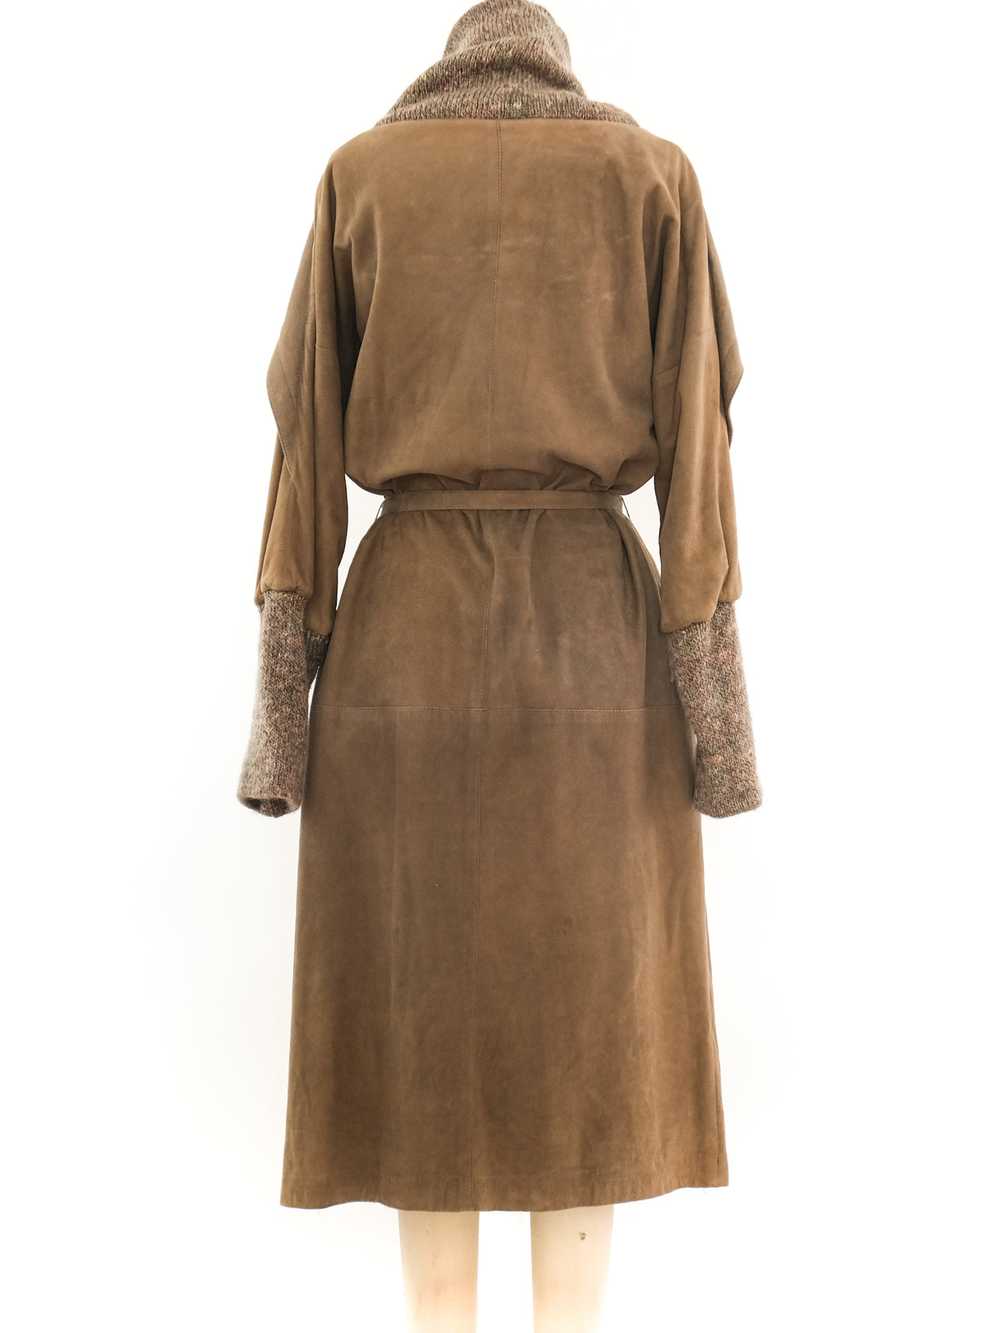 1980's Knit Trimmed Suede Dress - image 3